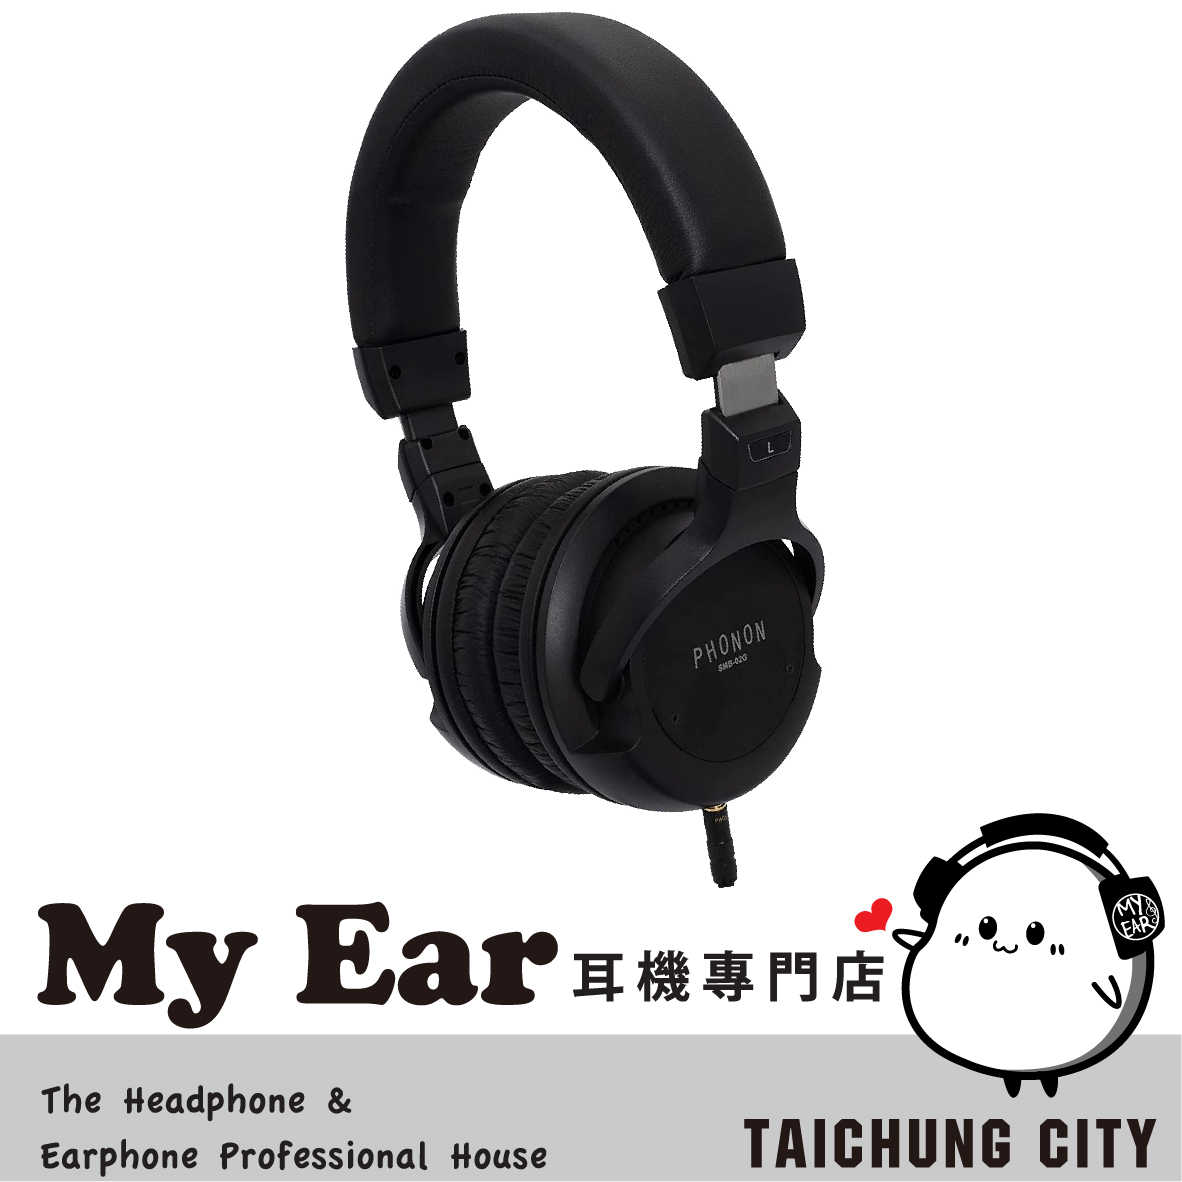 Phonon SMB-02G 耳罩式耳機 封閉式 半開放式 監聽 錄音 | My Ear耳機專門店